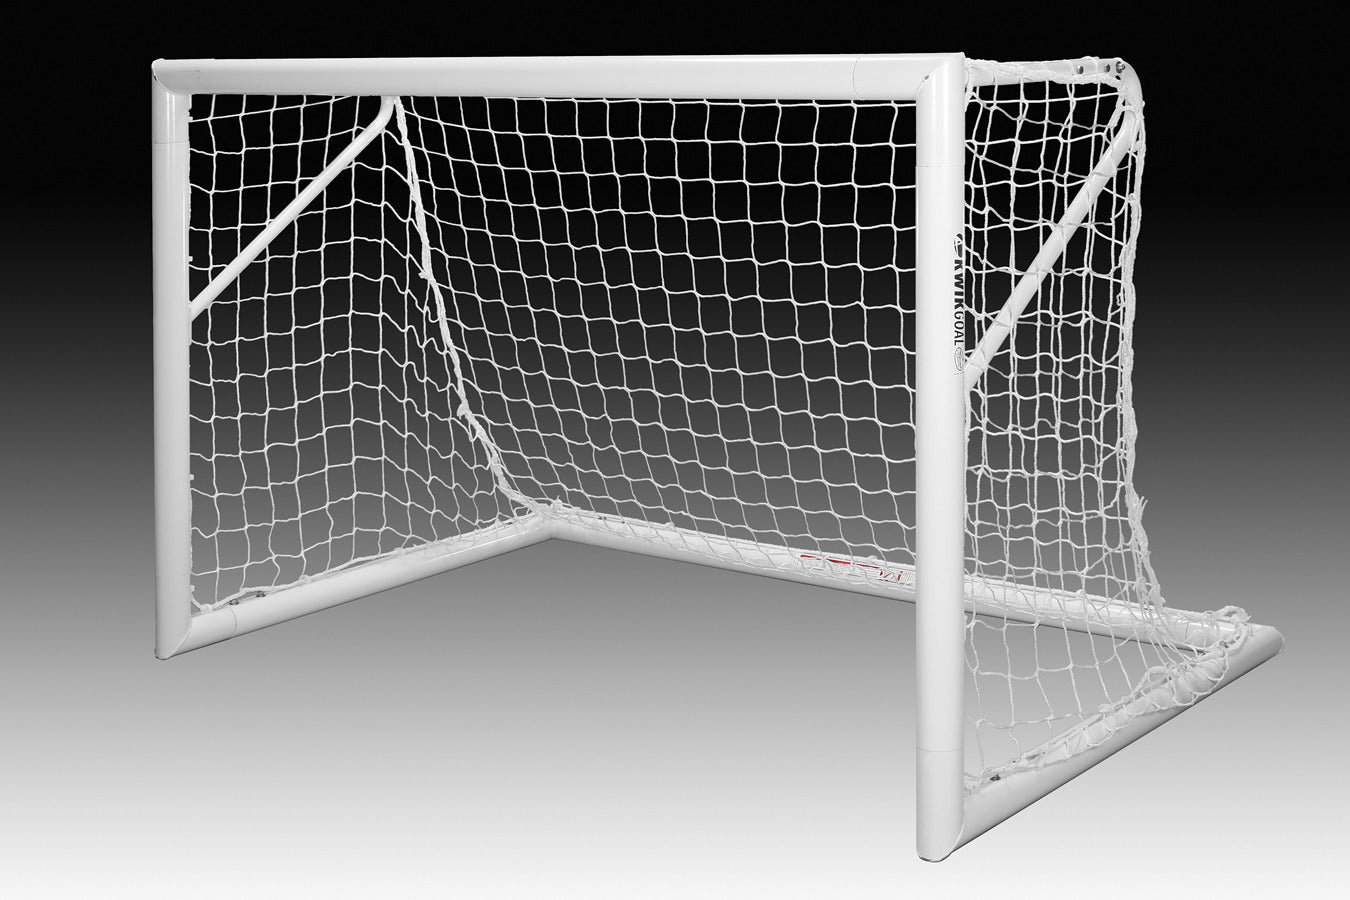 Kwik Goal 4 x 6 Deluxe European Club Soccer Goal